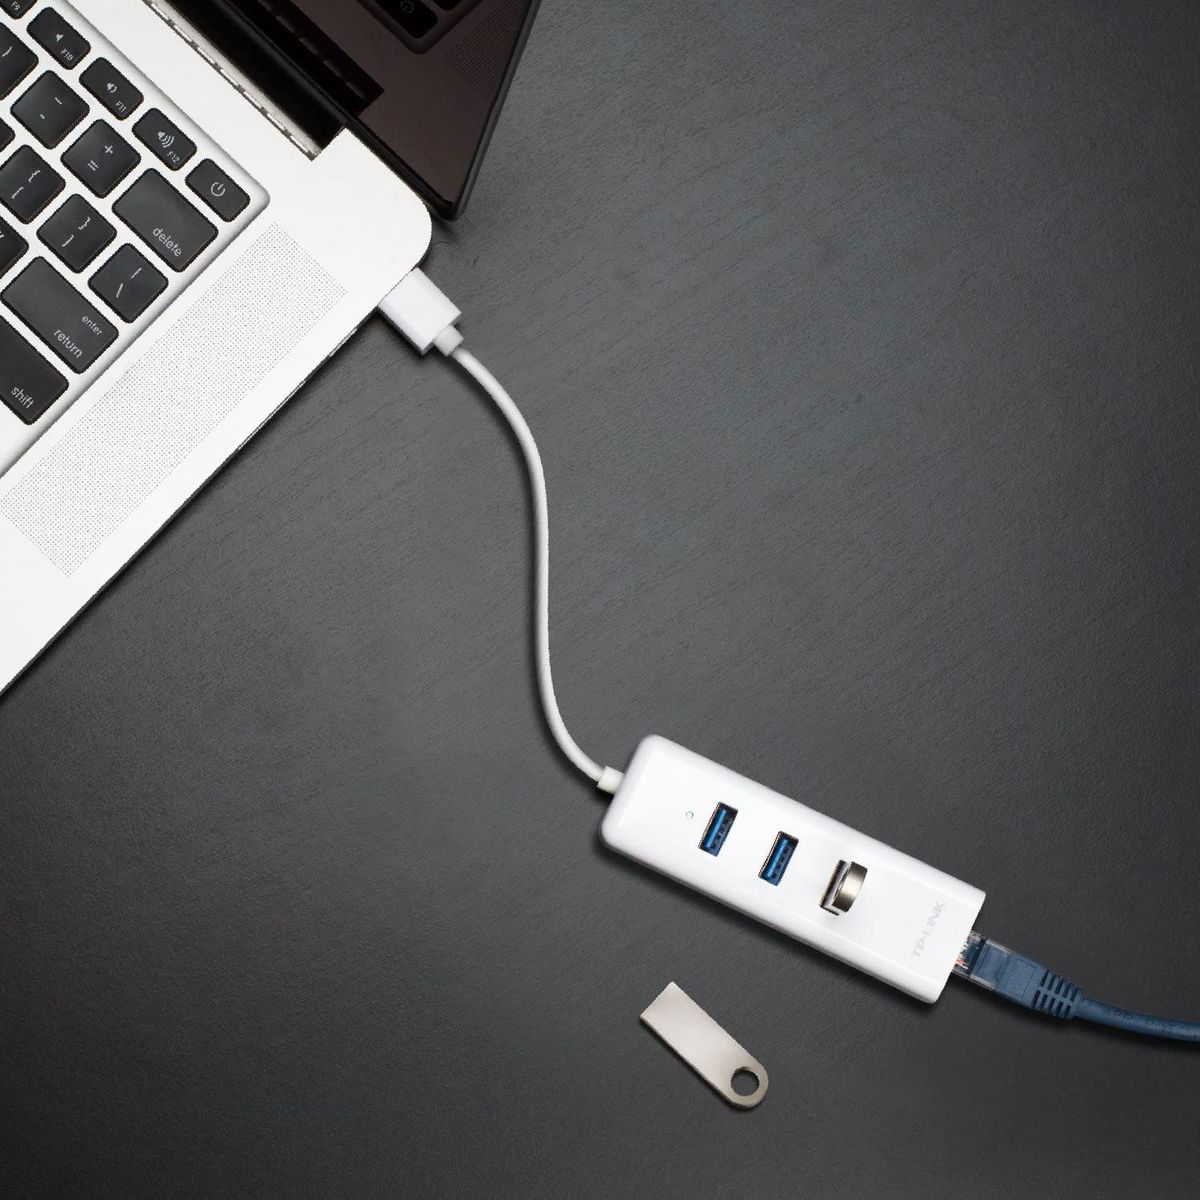 11 Best USB Hubs 2021 | The Strategist